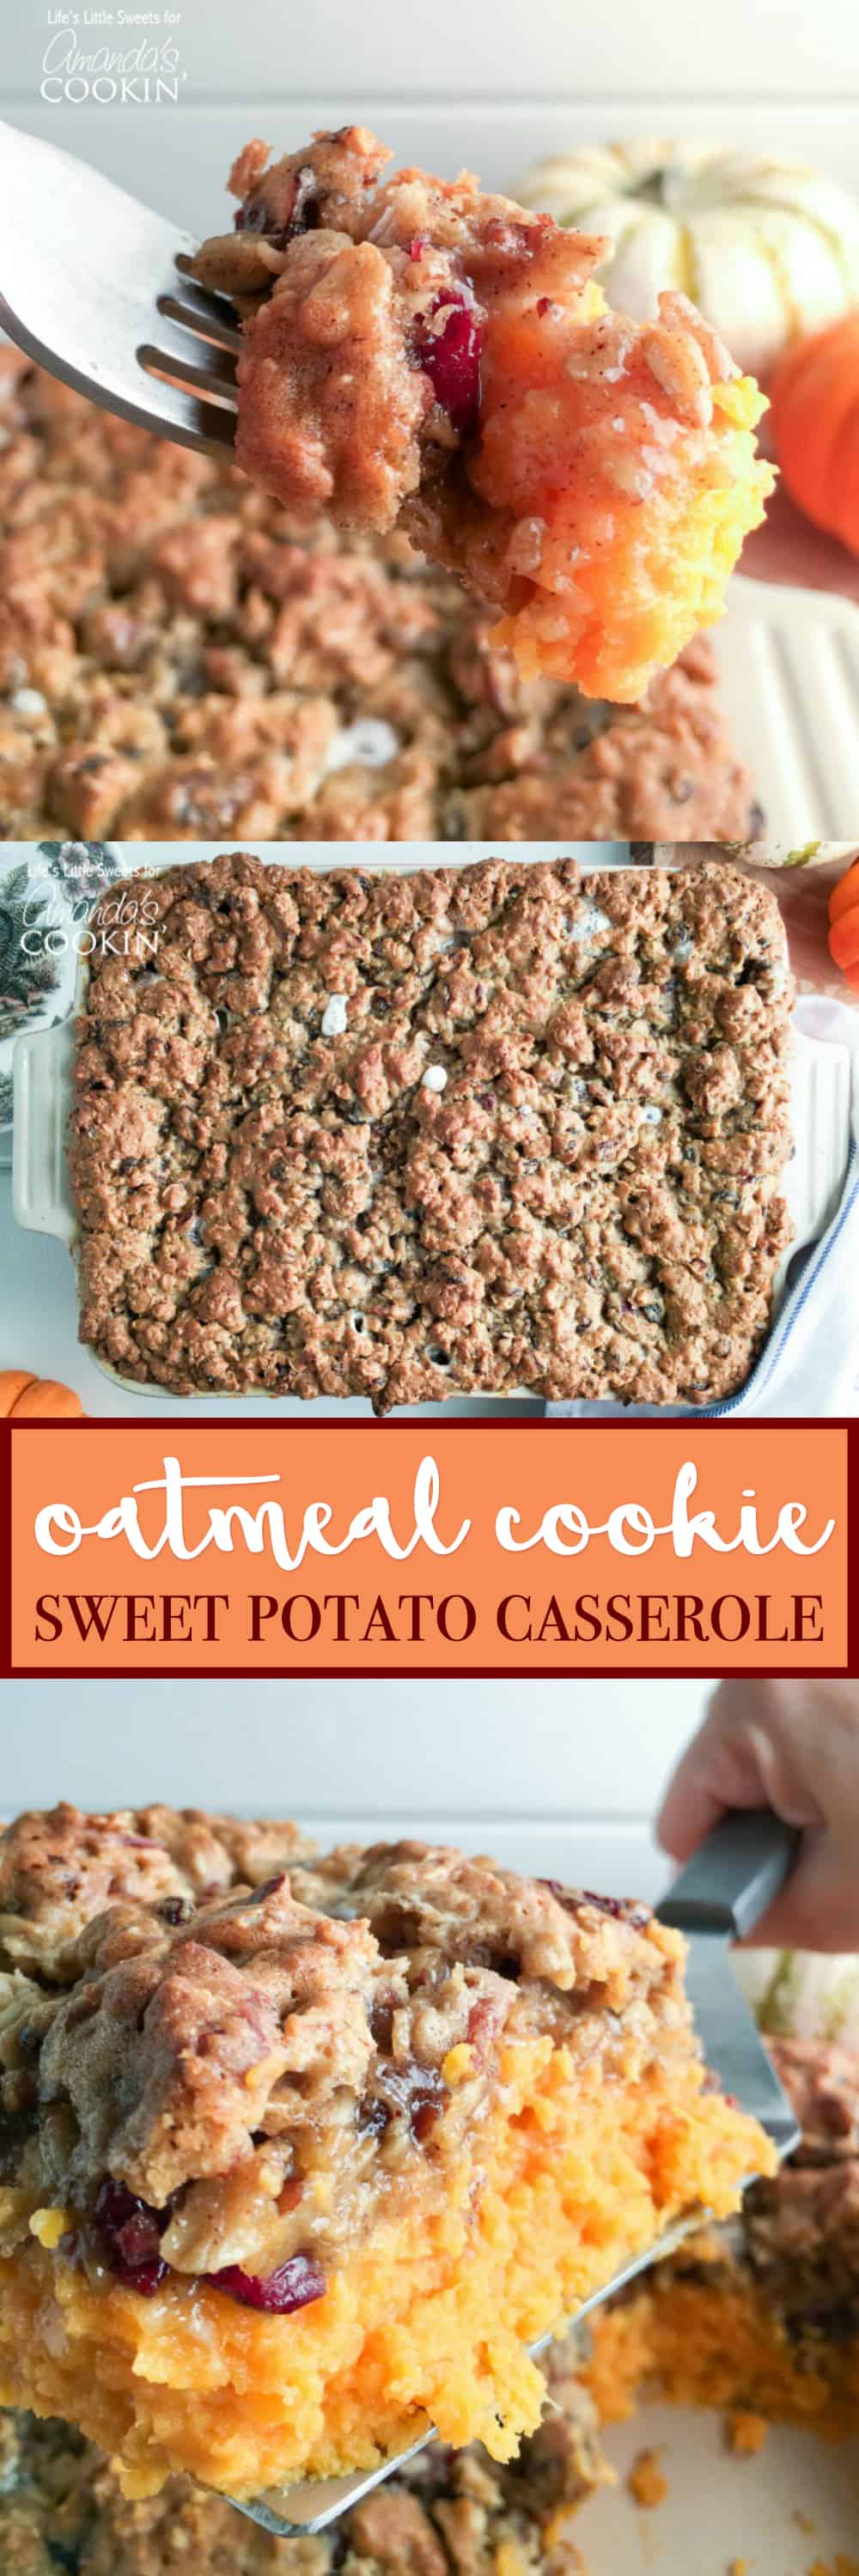 An overhead photo of an oatmeal cookie sweet potato casserole.